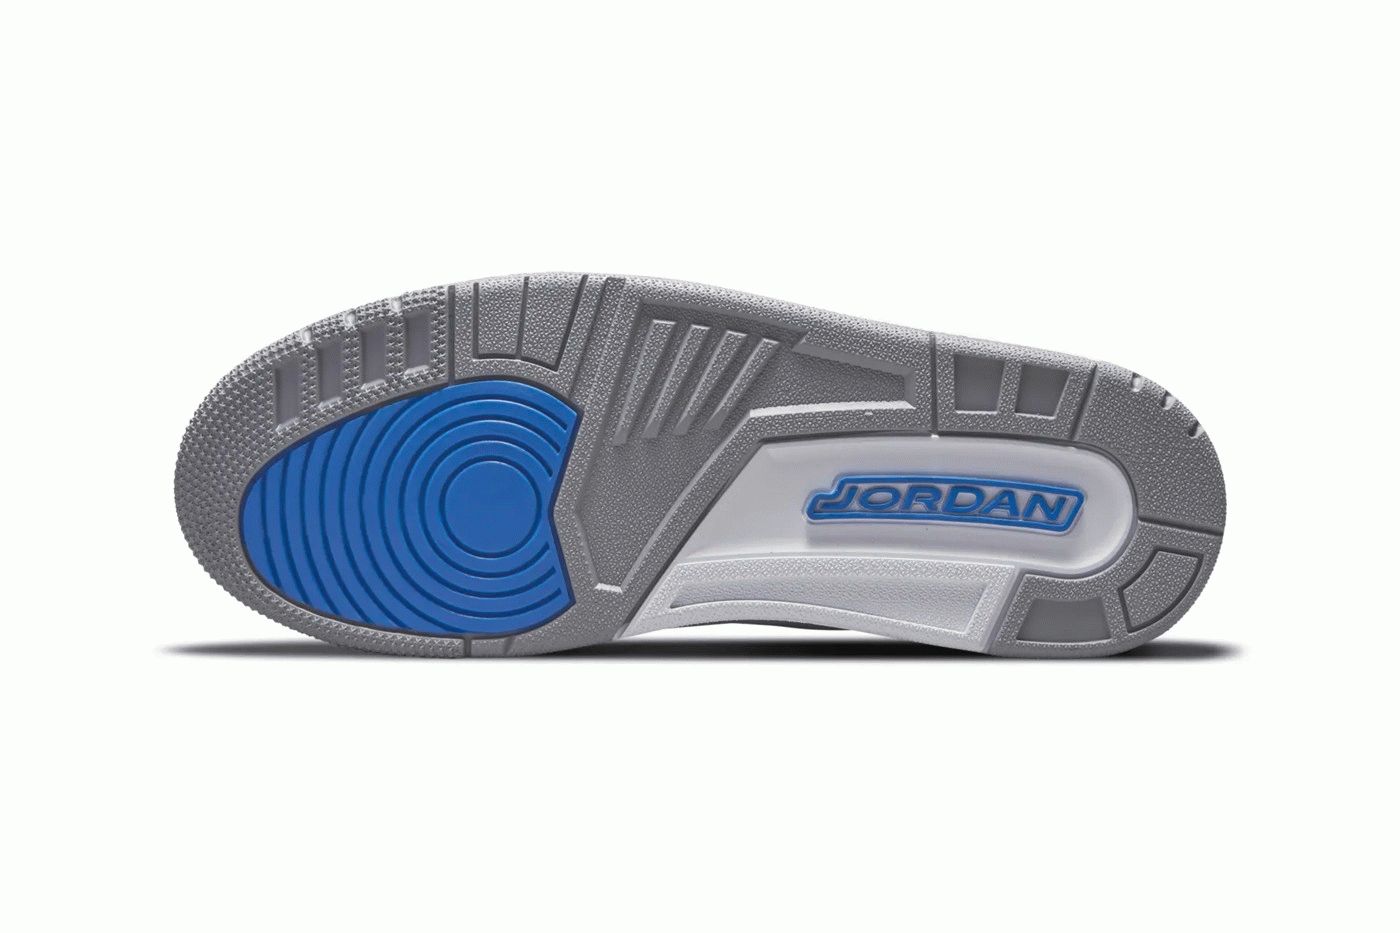 Air Jordan 3 Retro Racer Blue underfoot